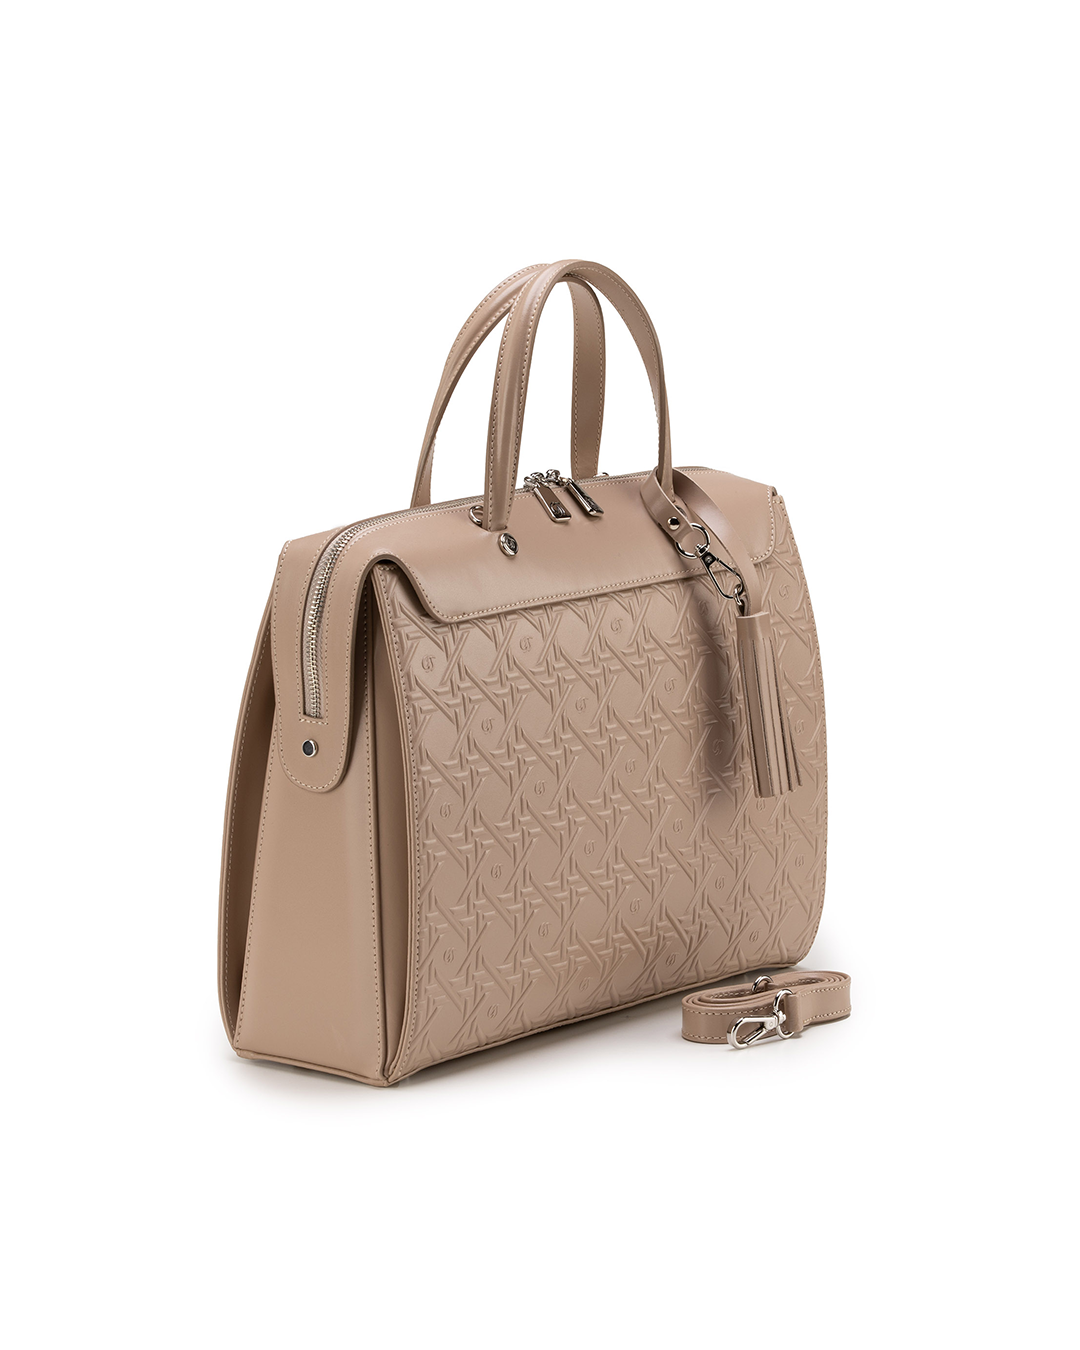 SS23 Gilda Tonelli - Lecce Bag  Italian leather bags since 1921